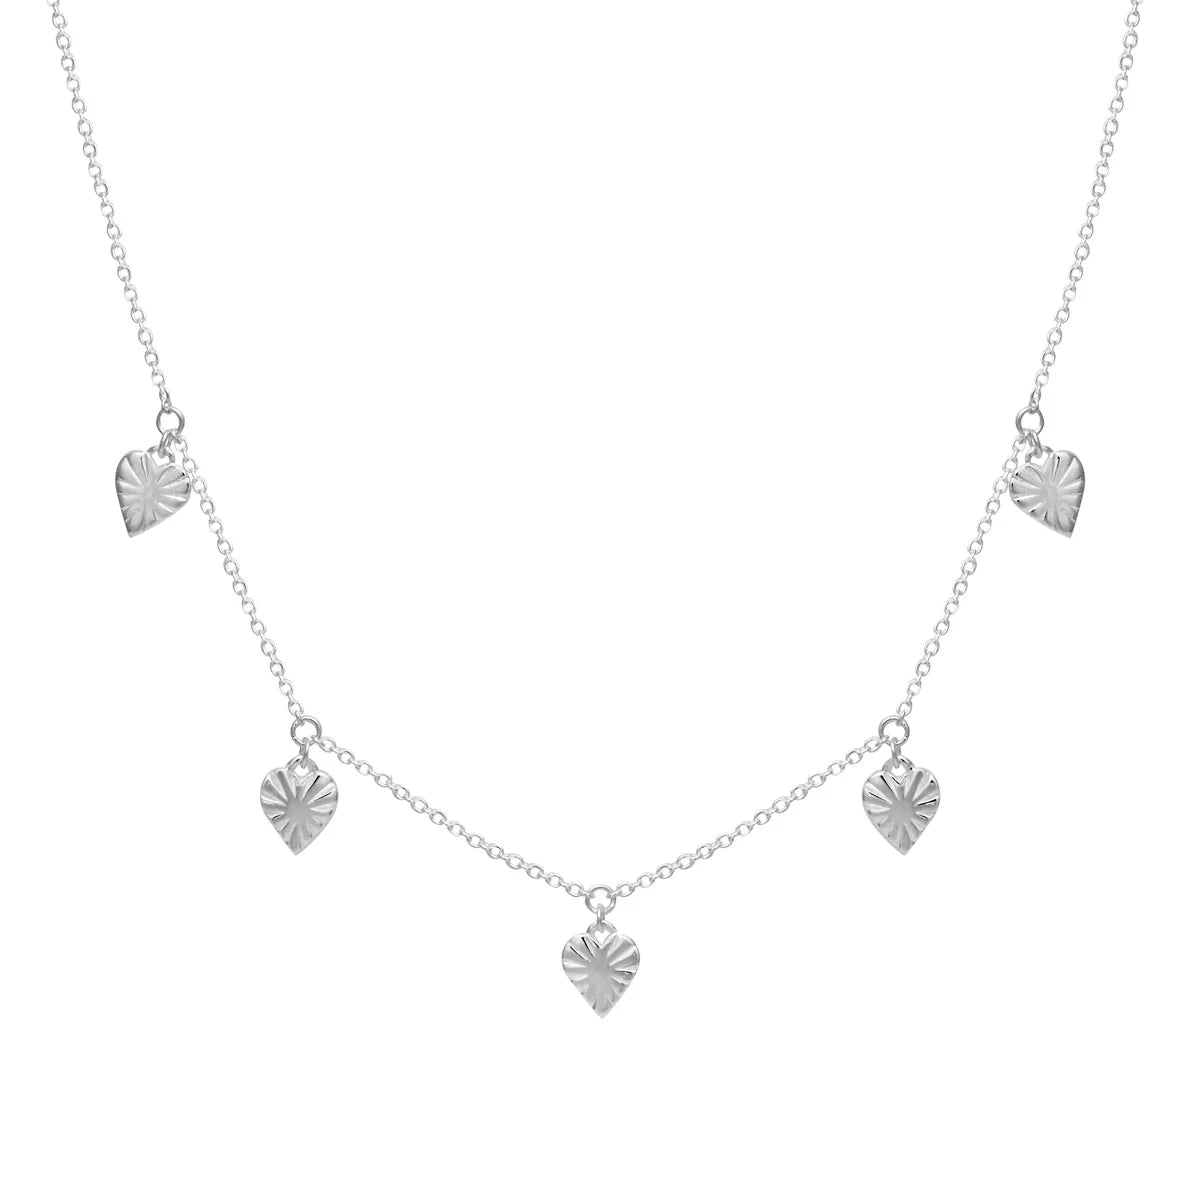 N020 - Sweetheart Drop Necklace